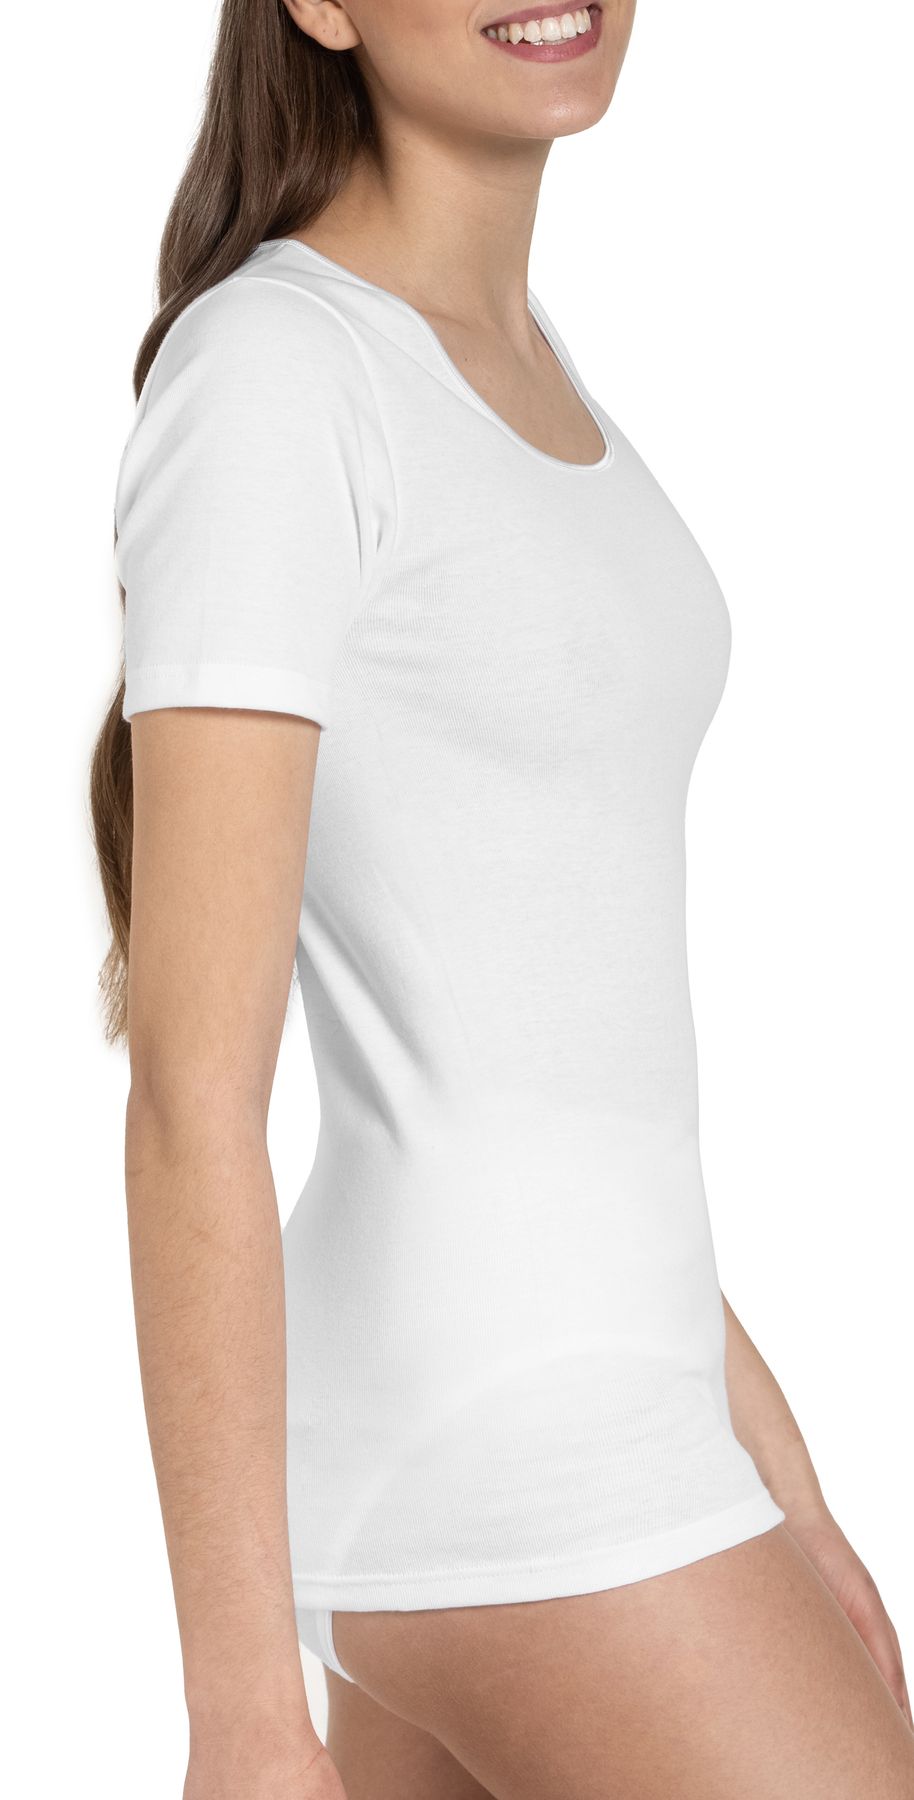 Damen Shirt Rundhals, 5er Pack, Bio Baumwolle, GOTS zertifiziert